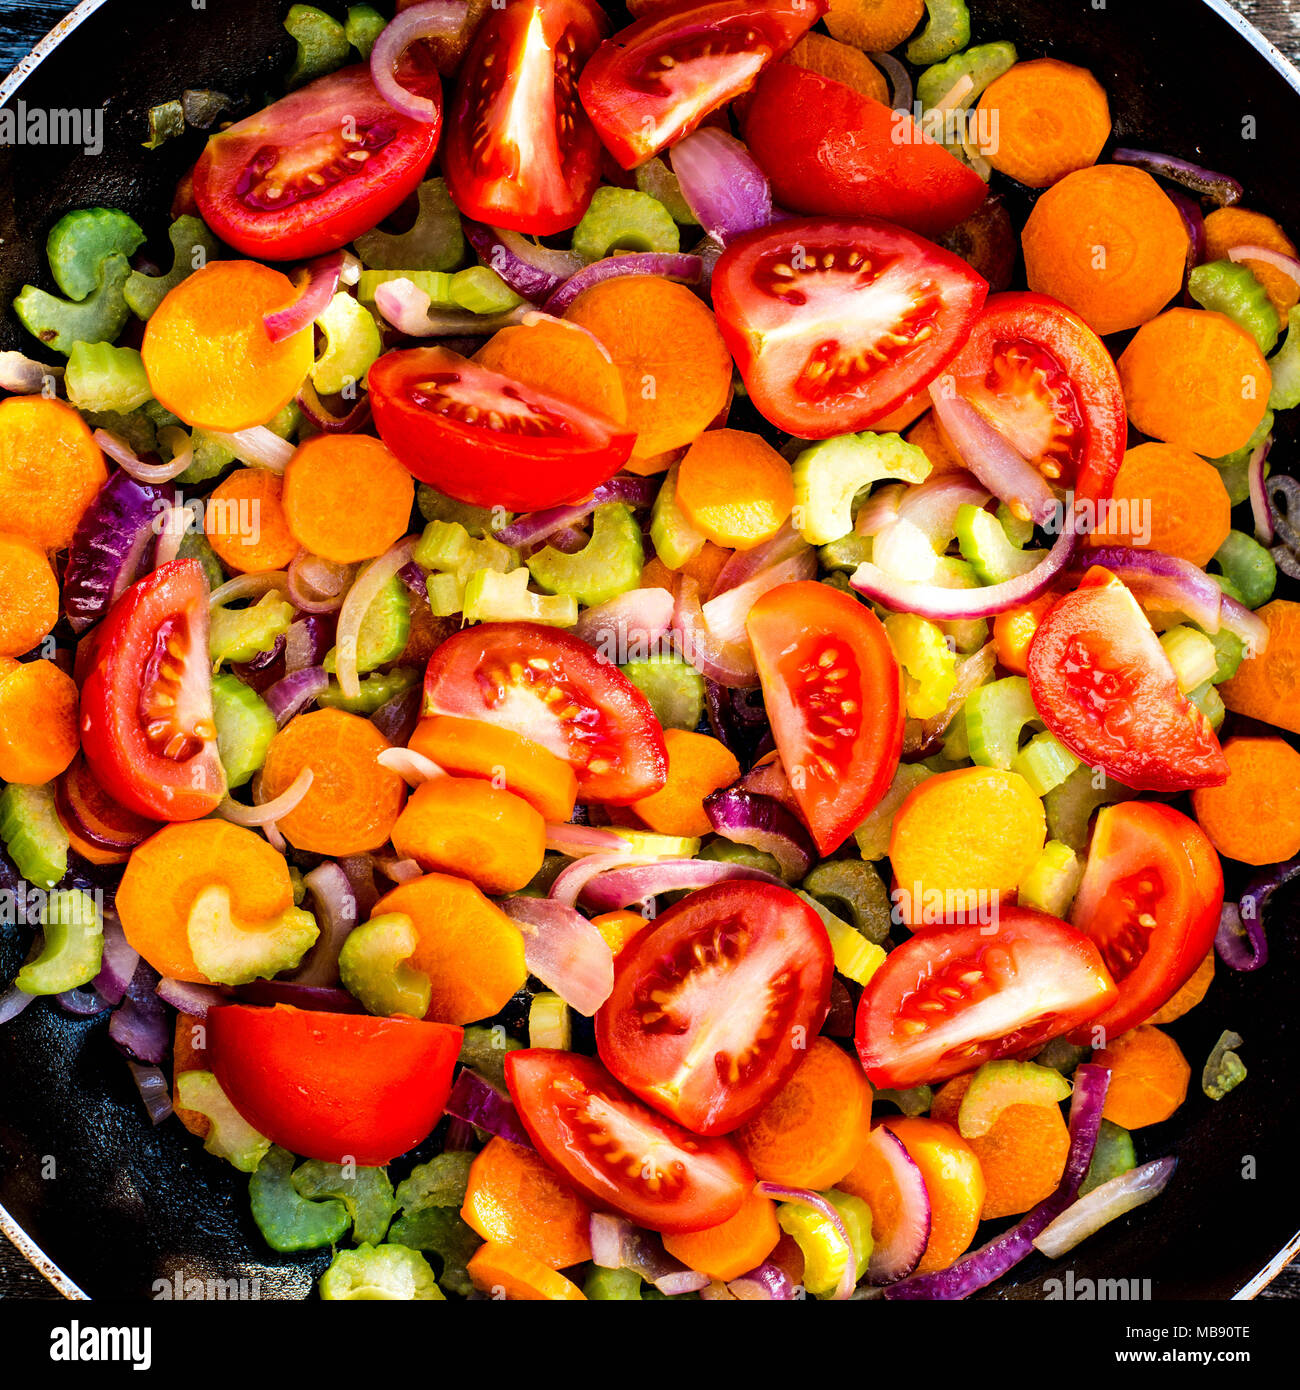 Pan Of Frsh Fried Vegetables Cooking Ingredients Stock Photo